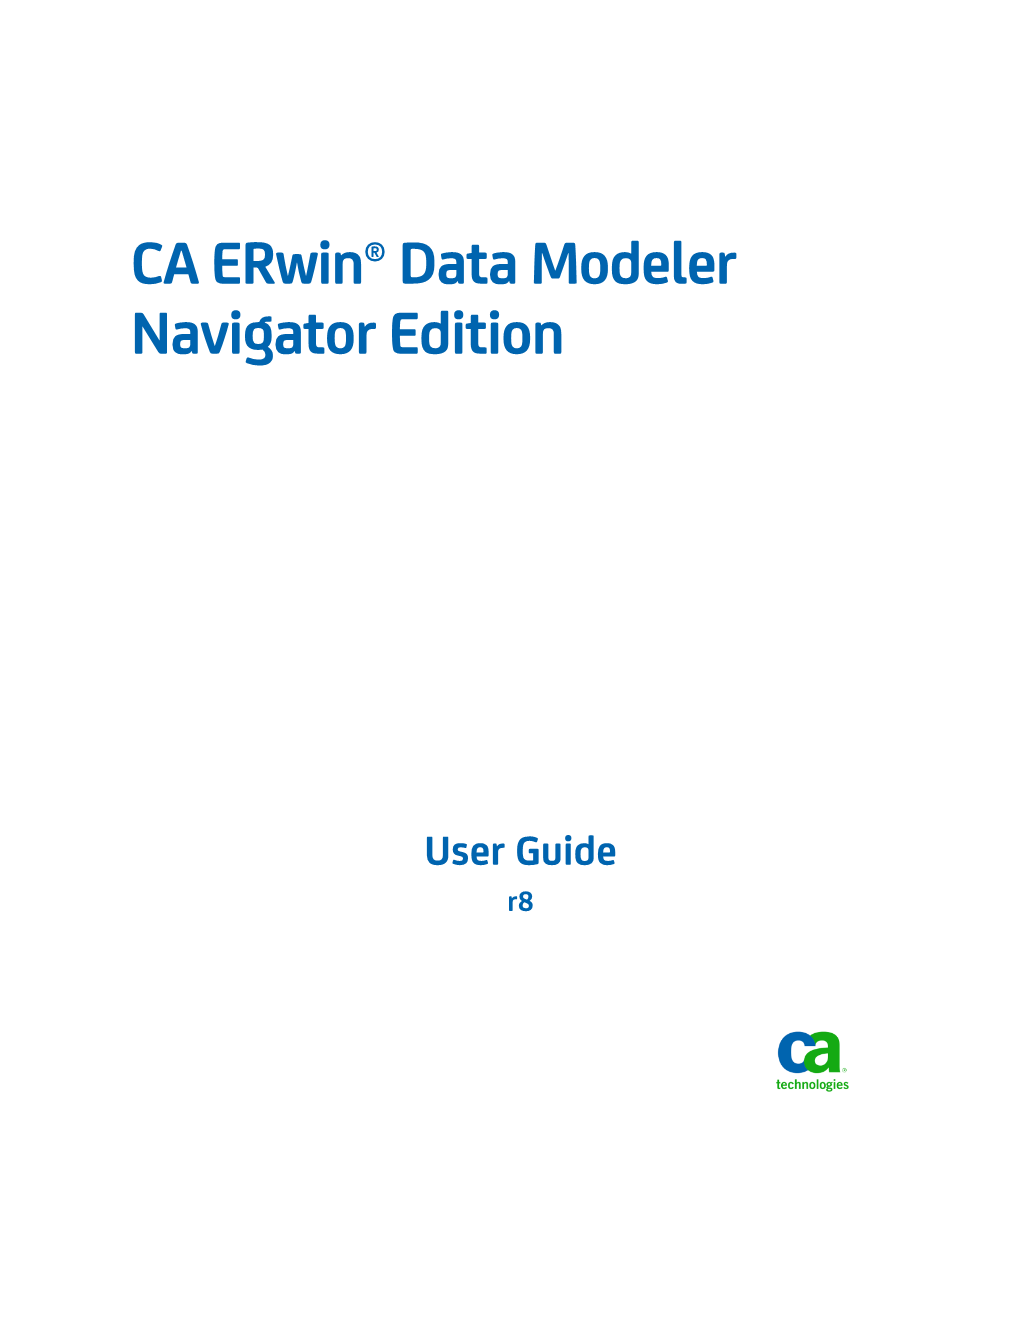 CA Erwin Data Modeler Navigator Edition User Guide